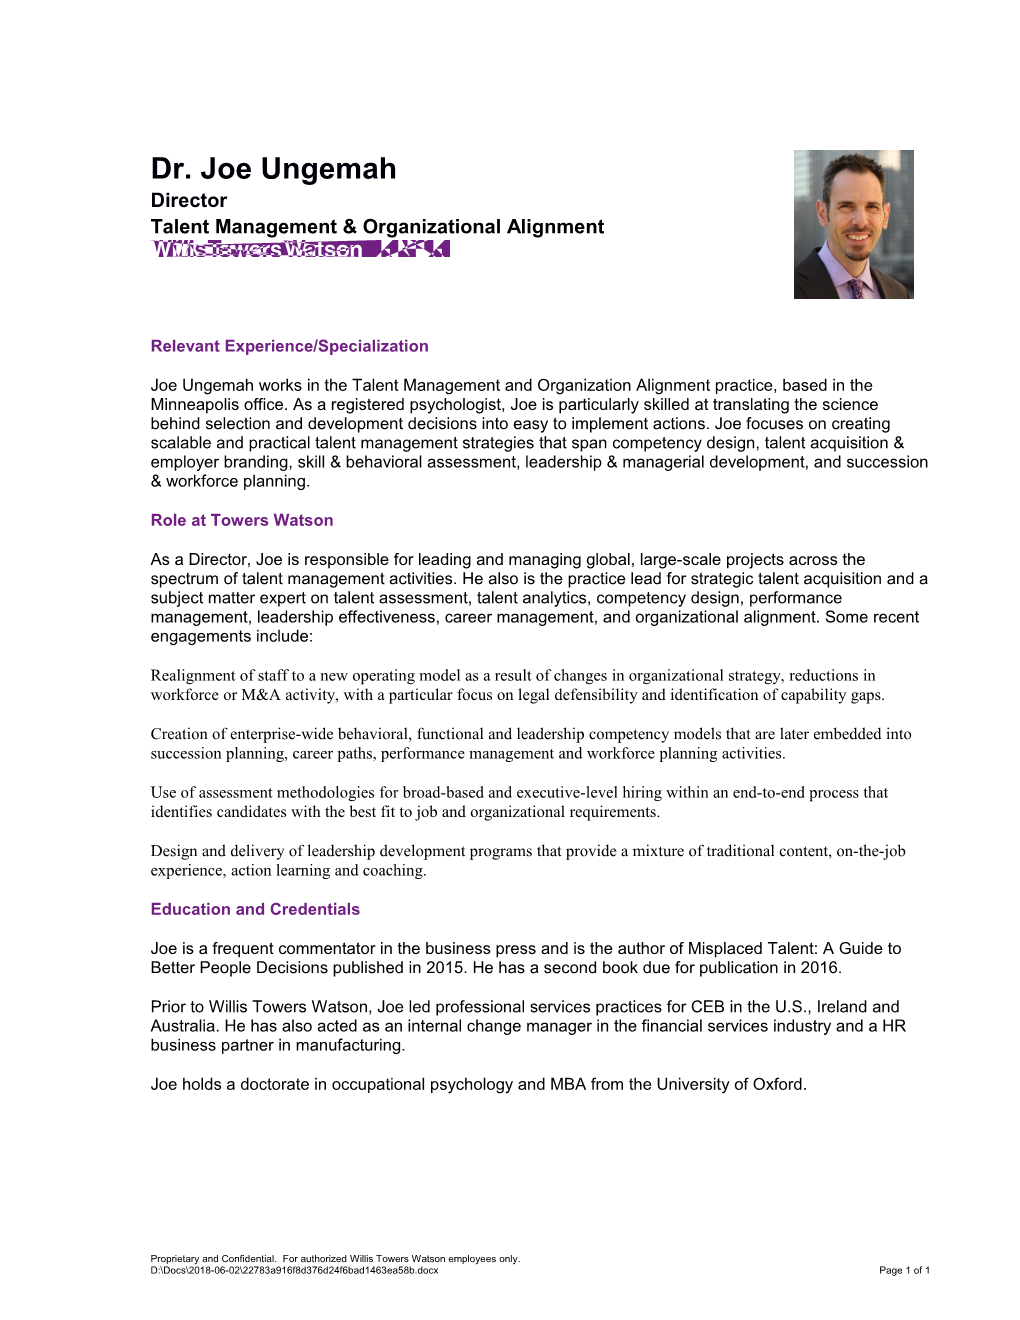 Talent Management & Organizational Alignment